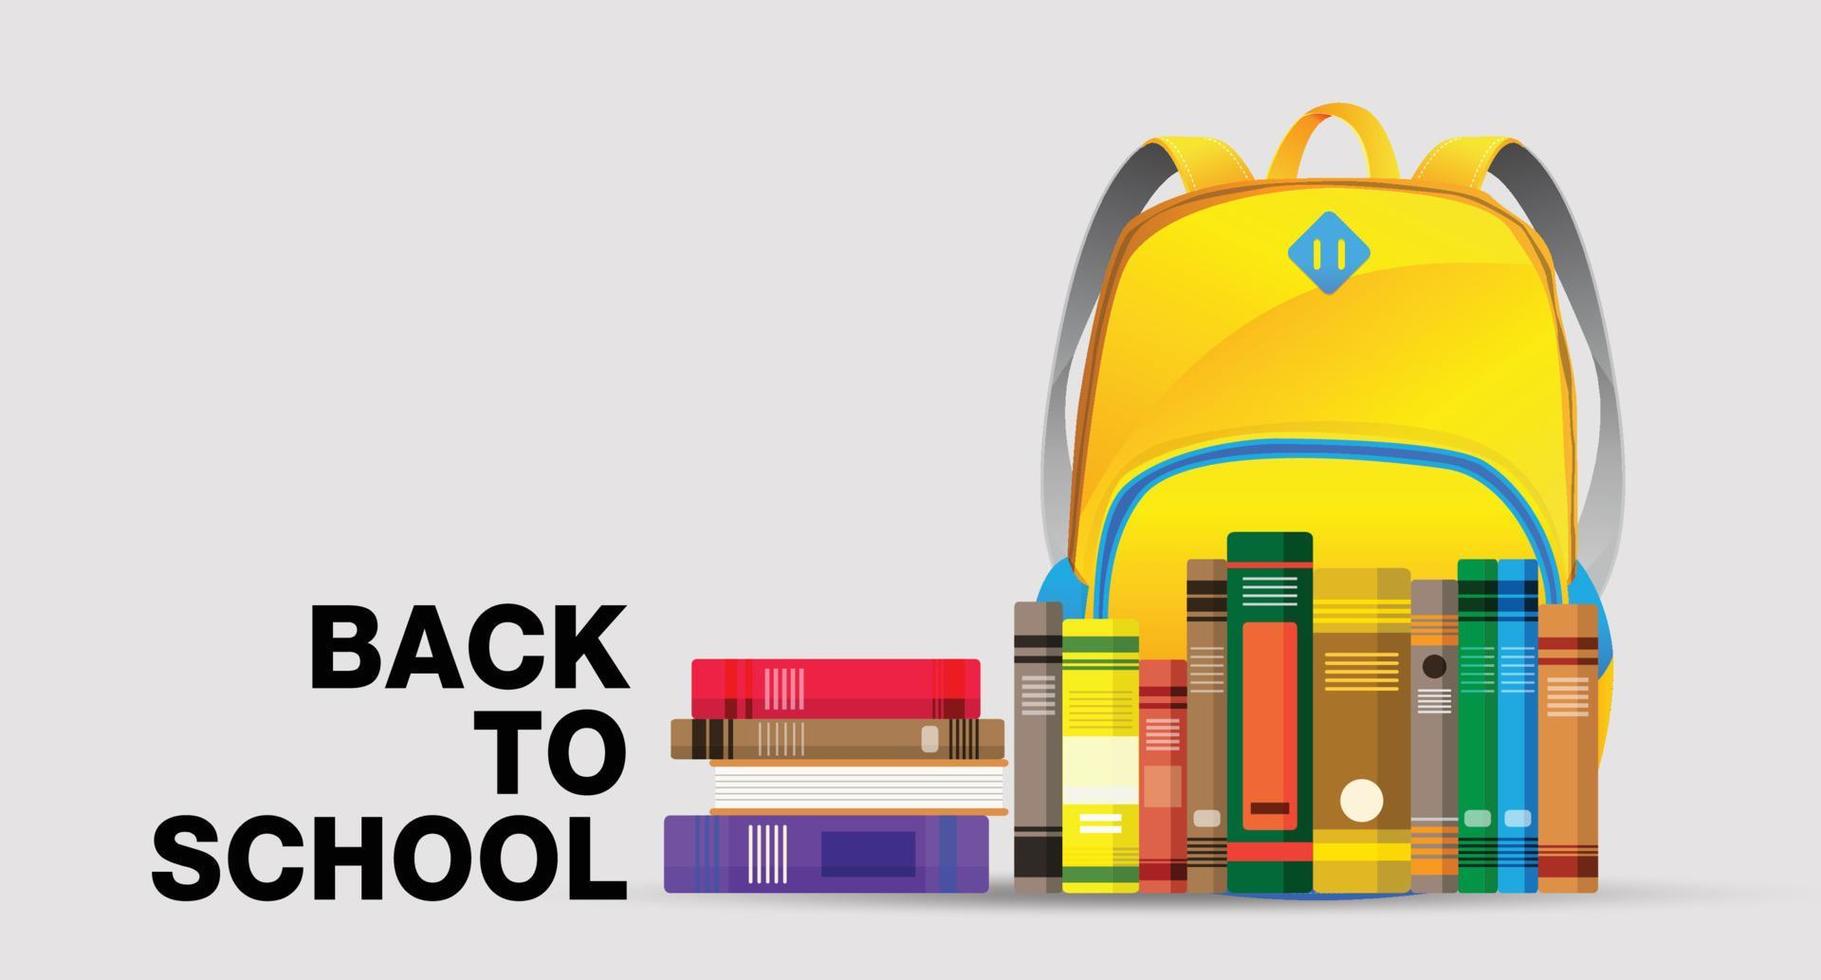 Back to school, school bag on background, Education Concept, Vector illustration